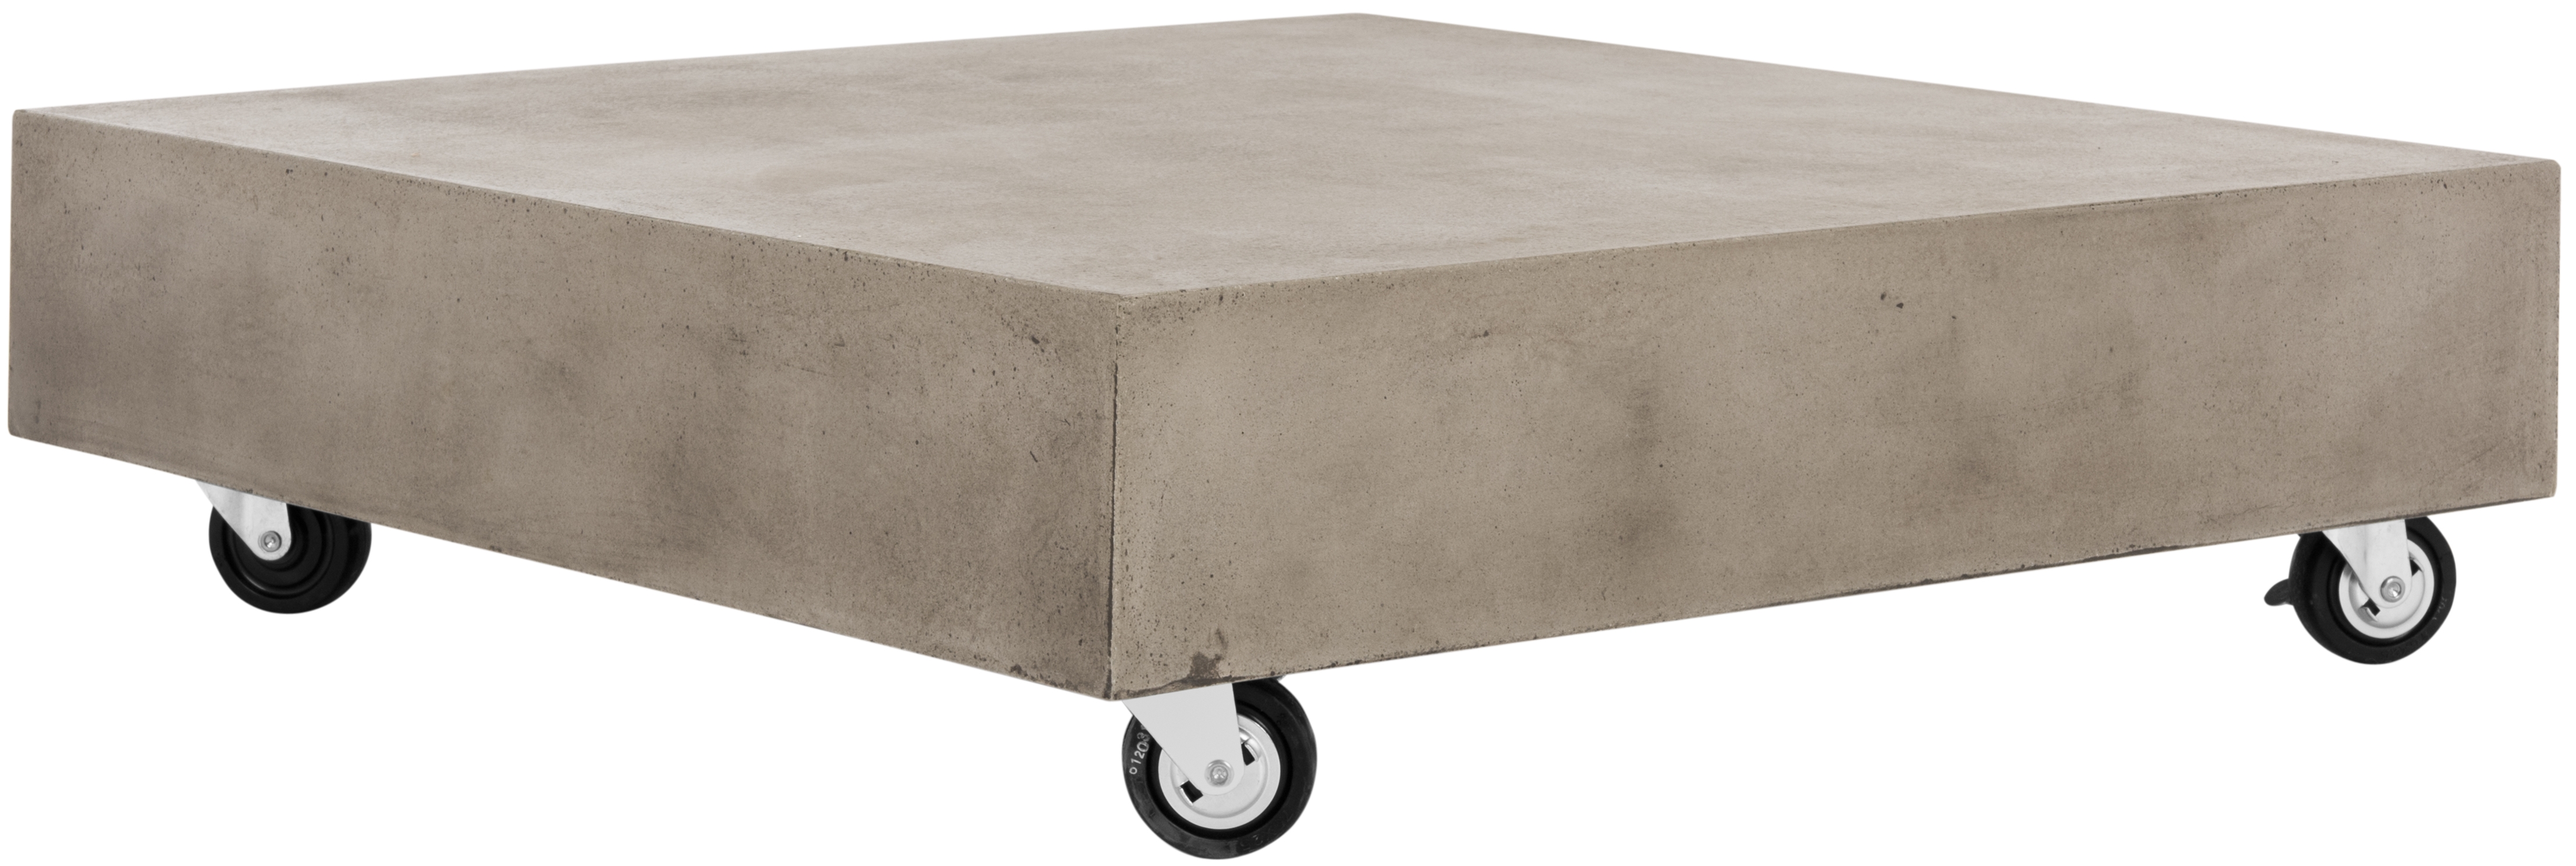 Gargon Indoor/Outdoor Modern Concrete 9.84-Inch H Coffee Table With Casters - Dark Grey - Arlo Home - Image 1